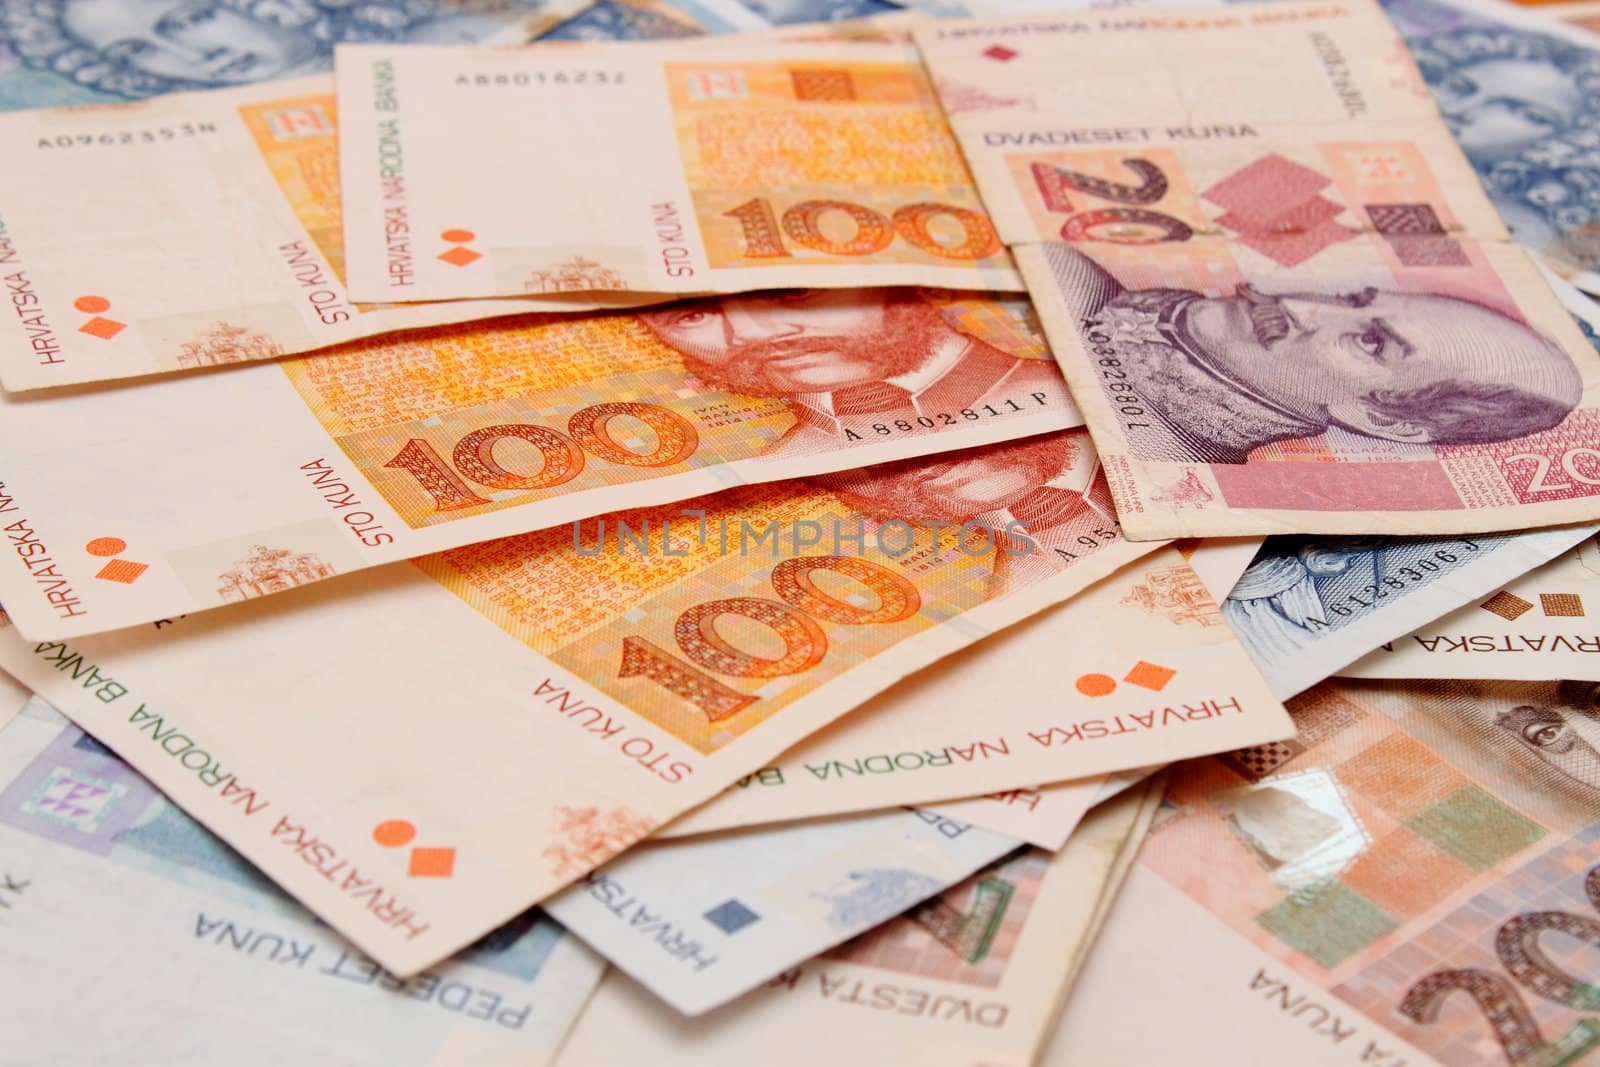 Croatian Kuna banknotes layed out  by artush